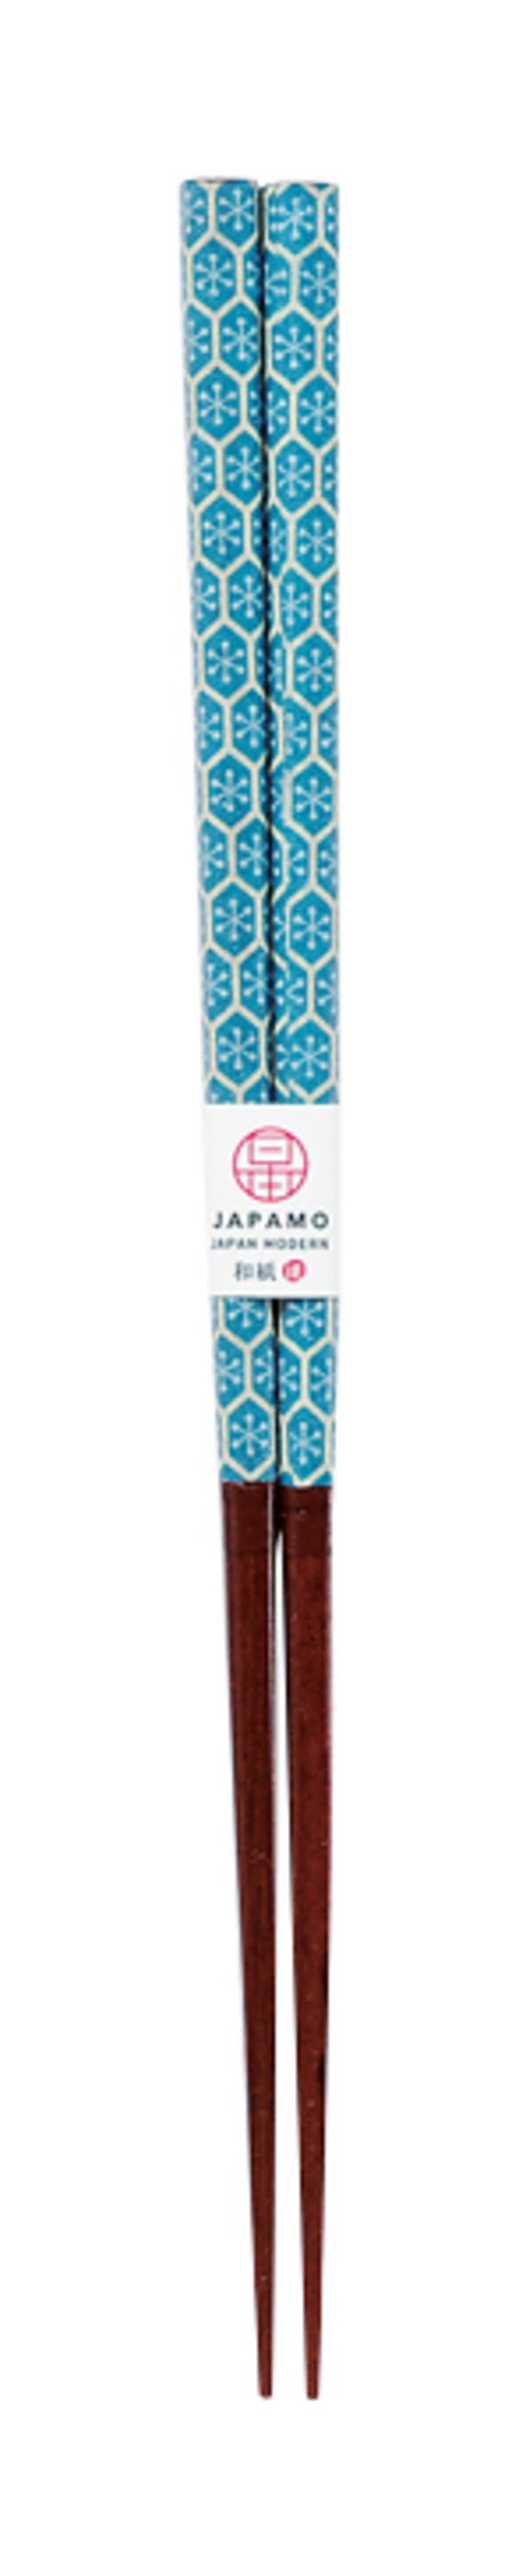 Japanese washi wooden chopsticks